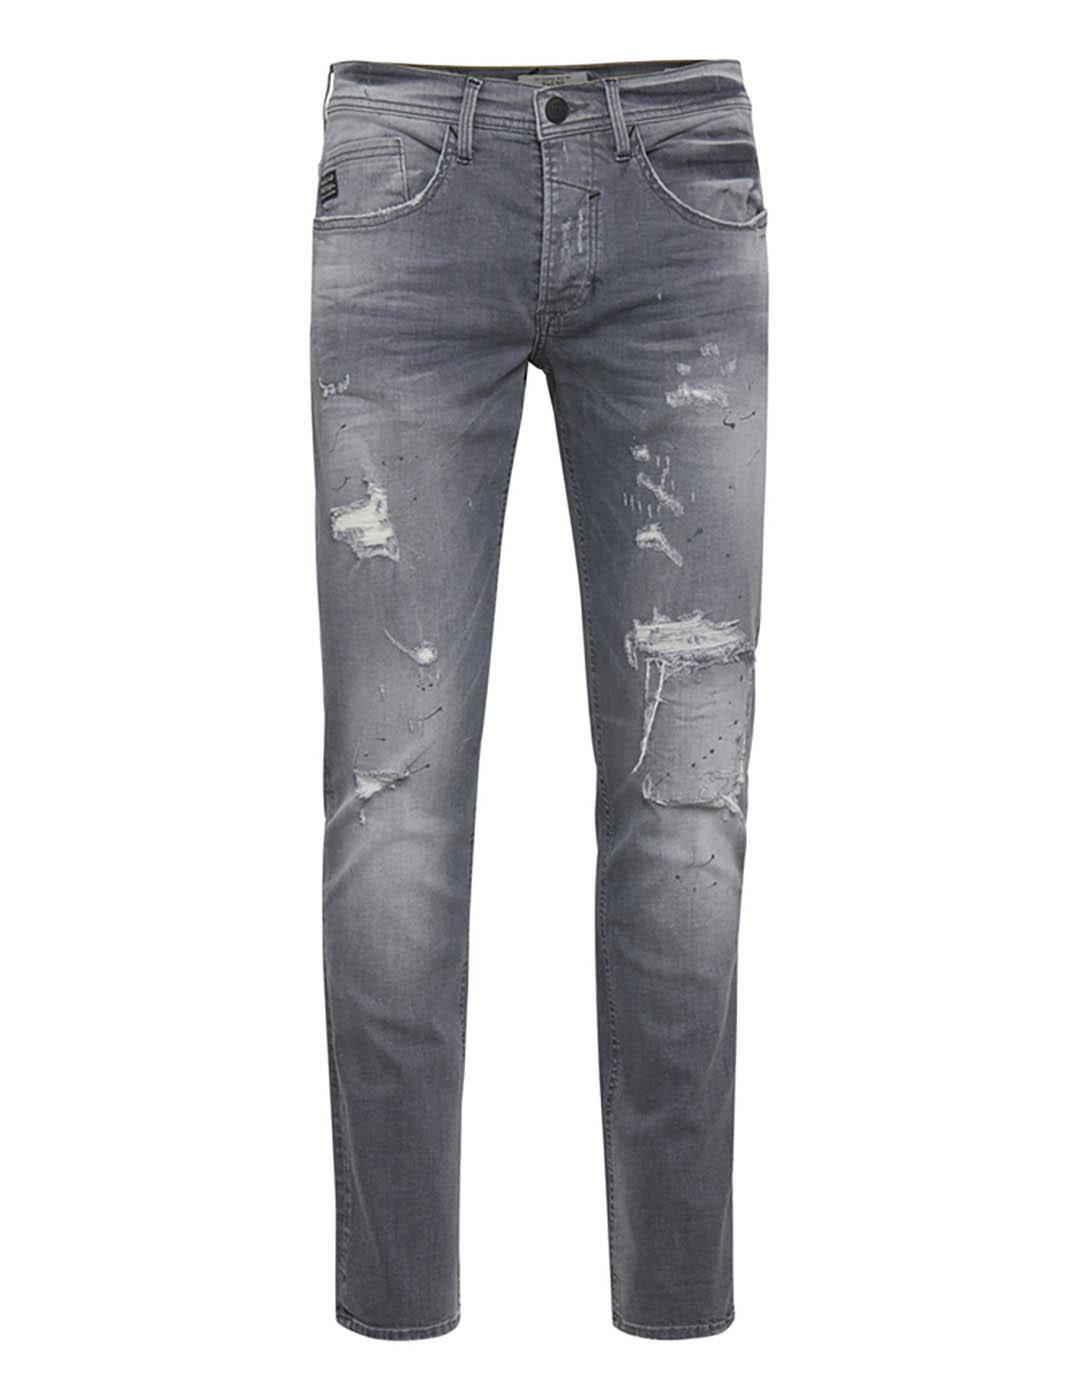 Jeans Rotos BLEND Gris - Bicos de Fío